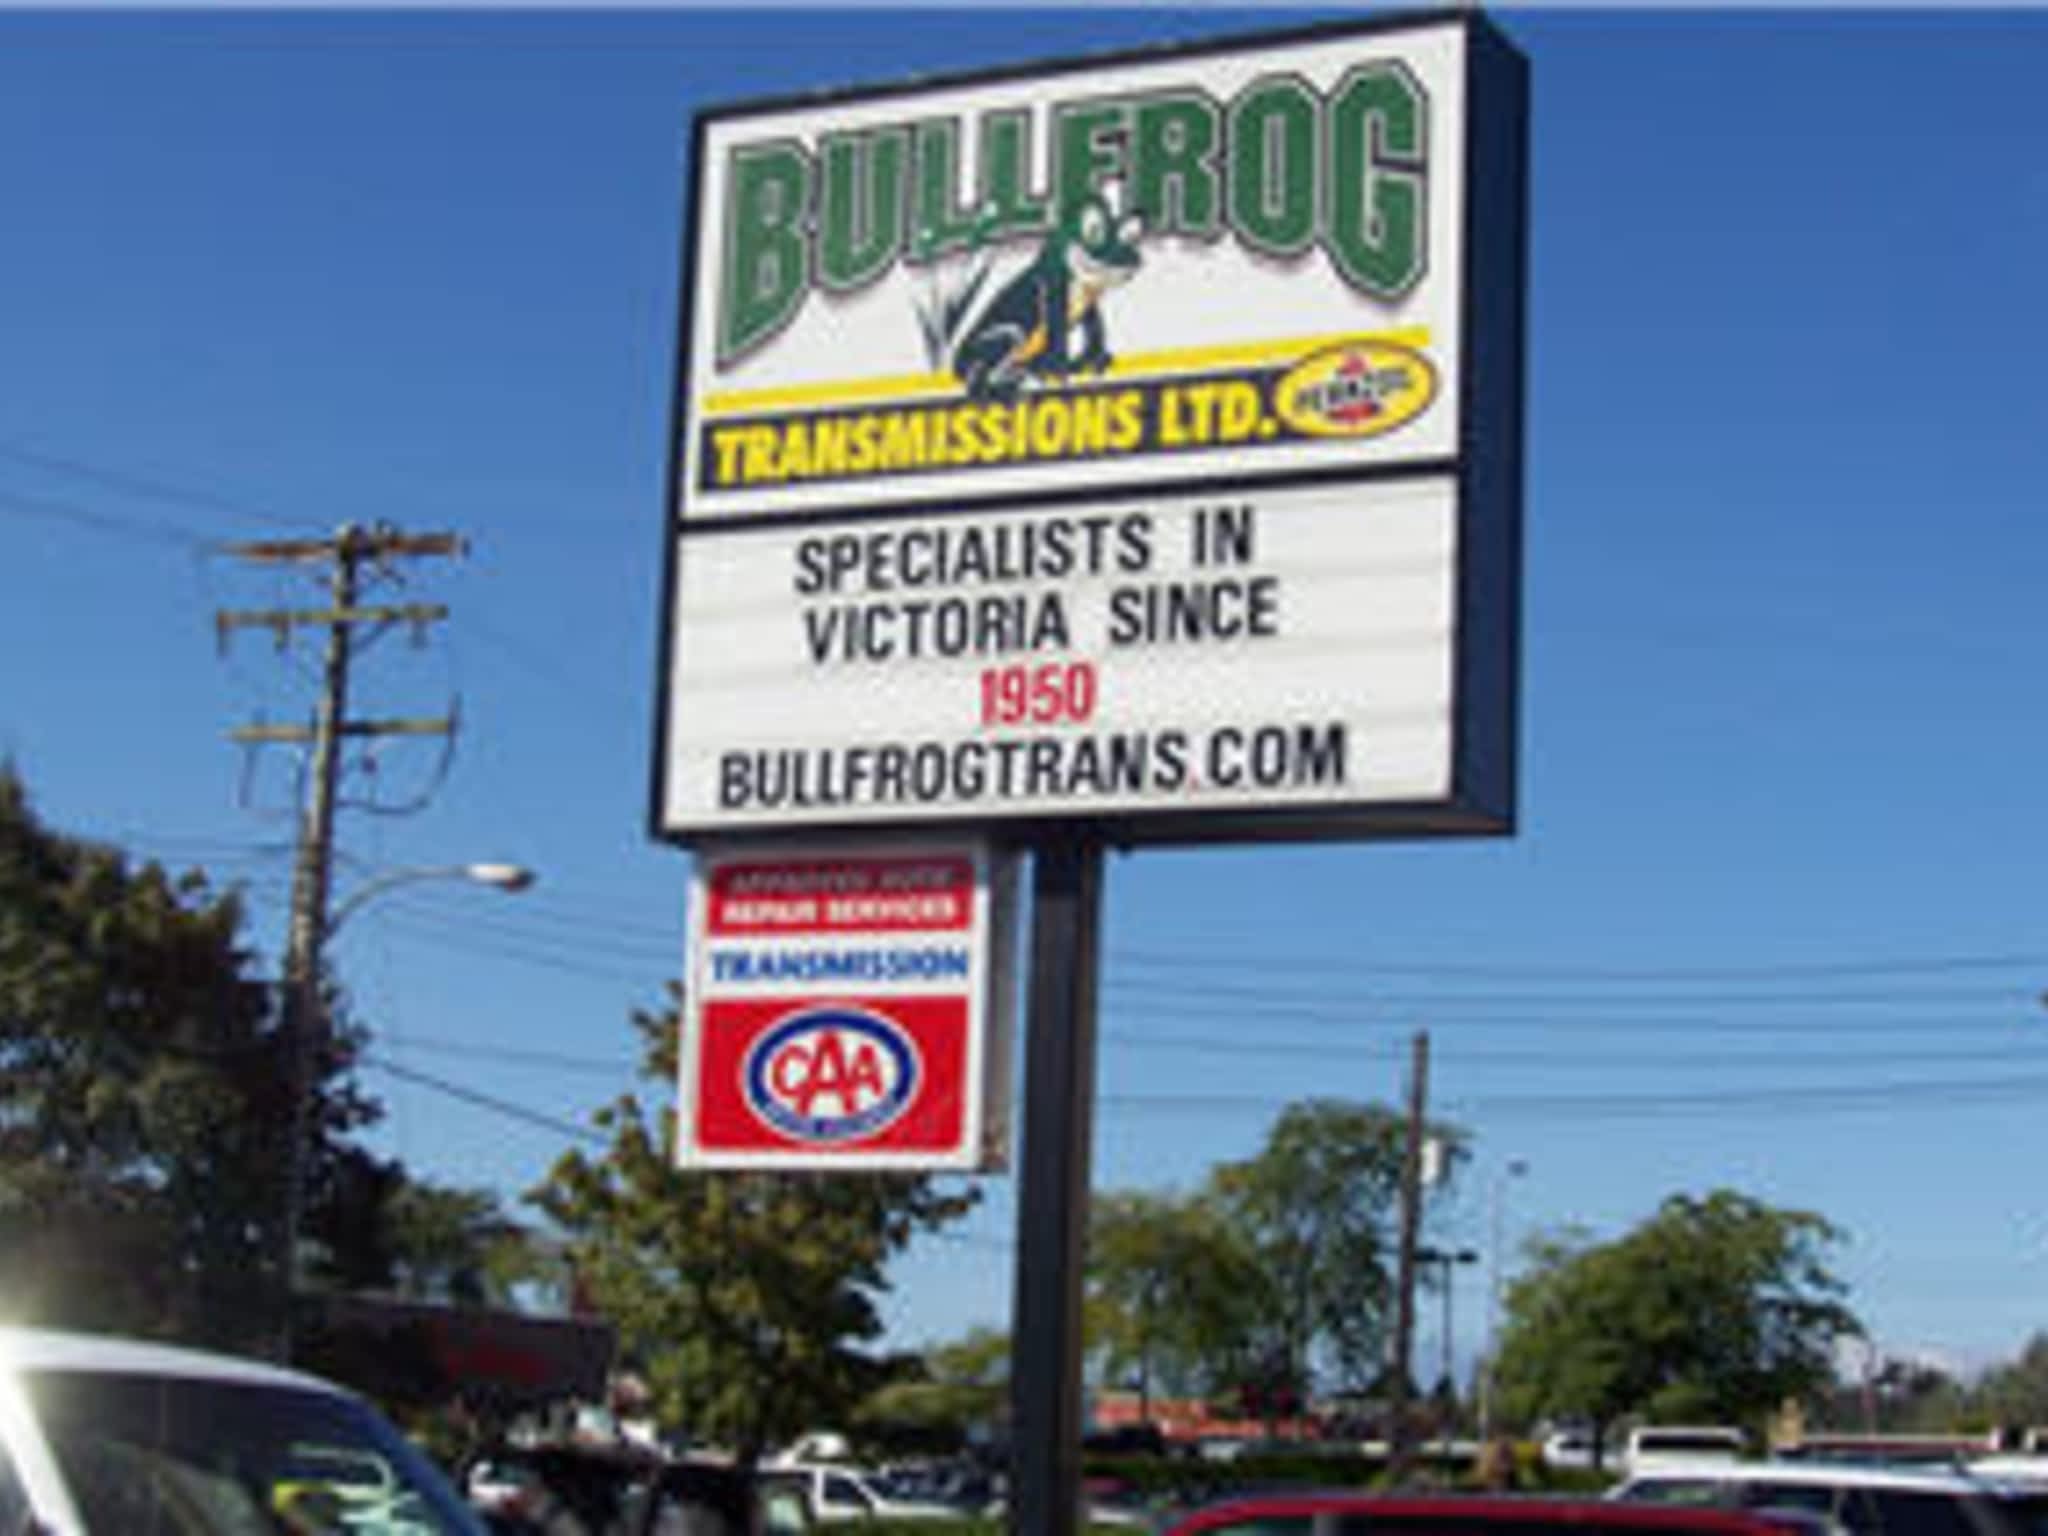 photo Bullfrog Transmissions Ltd